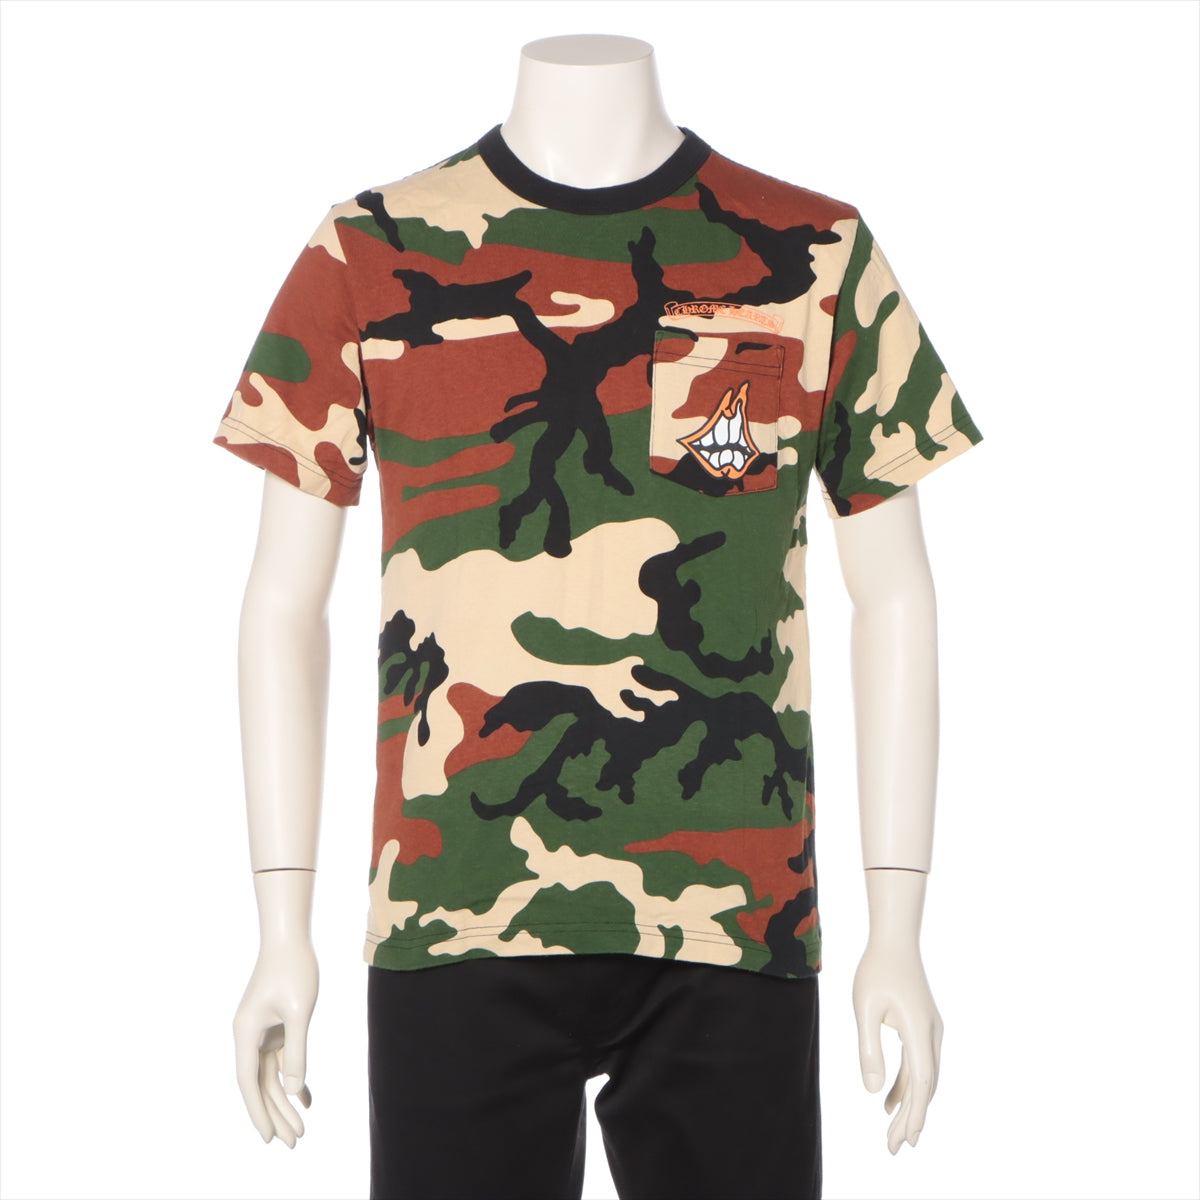 Chrome Hearts Matty Boy T-shirt Cotton size M Camouflage PPO CAUTION